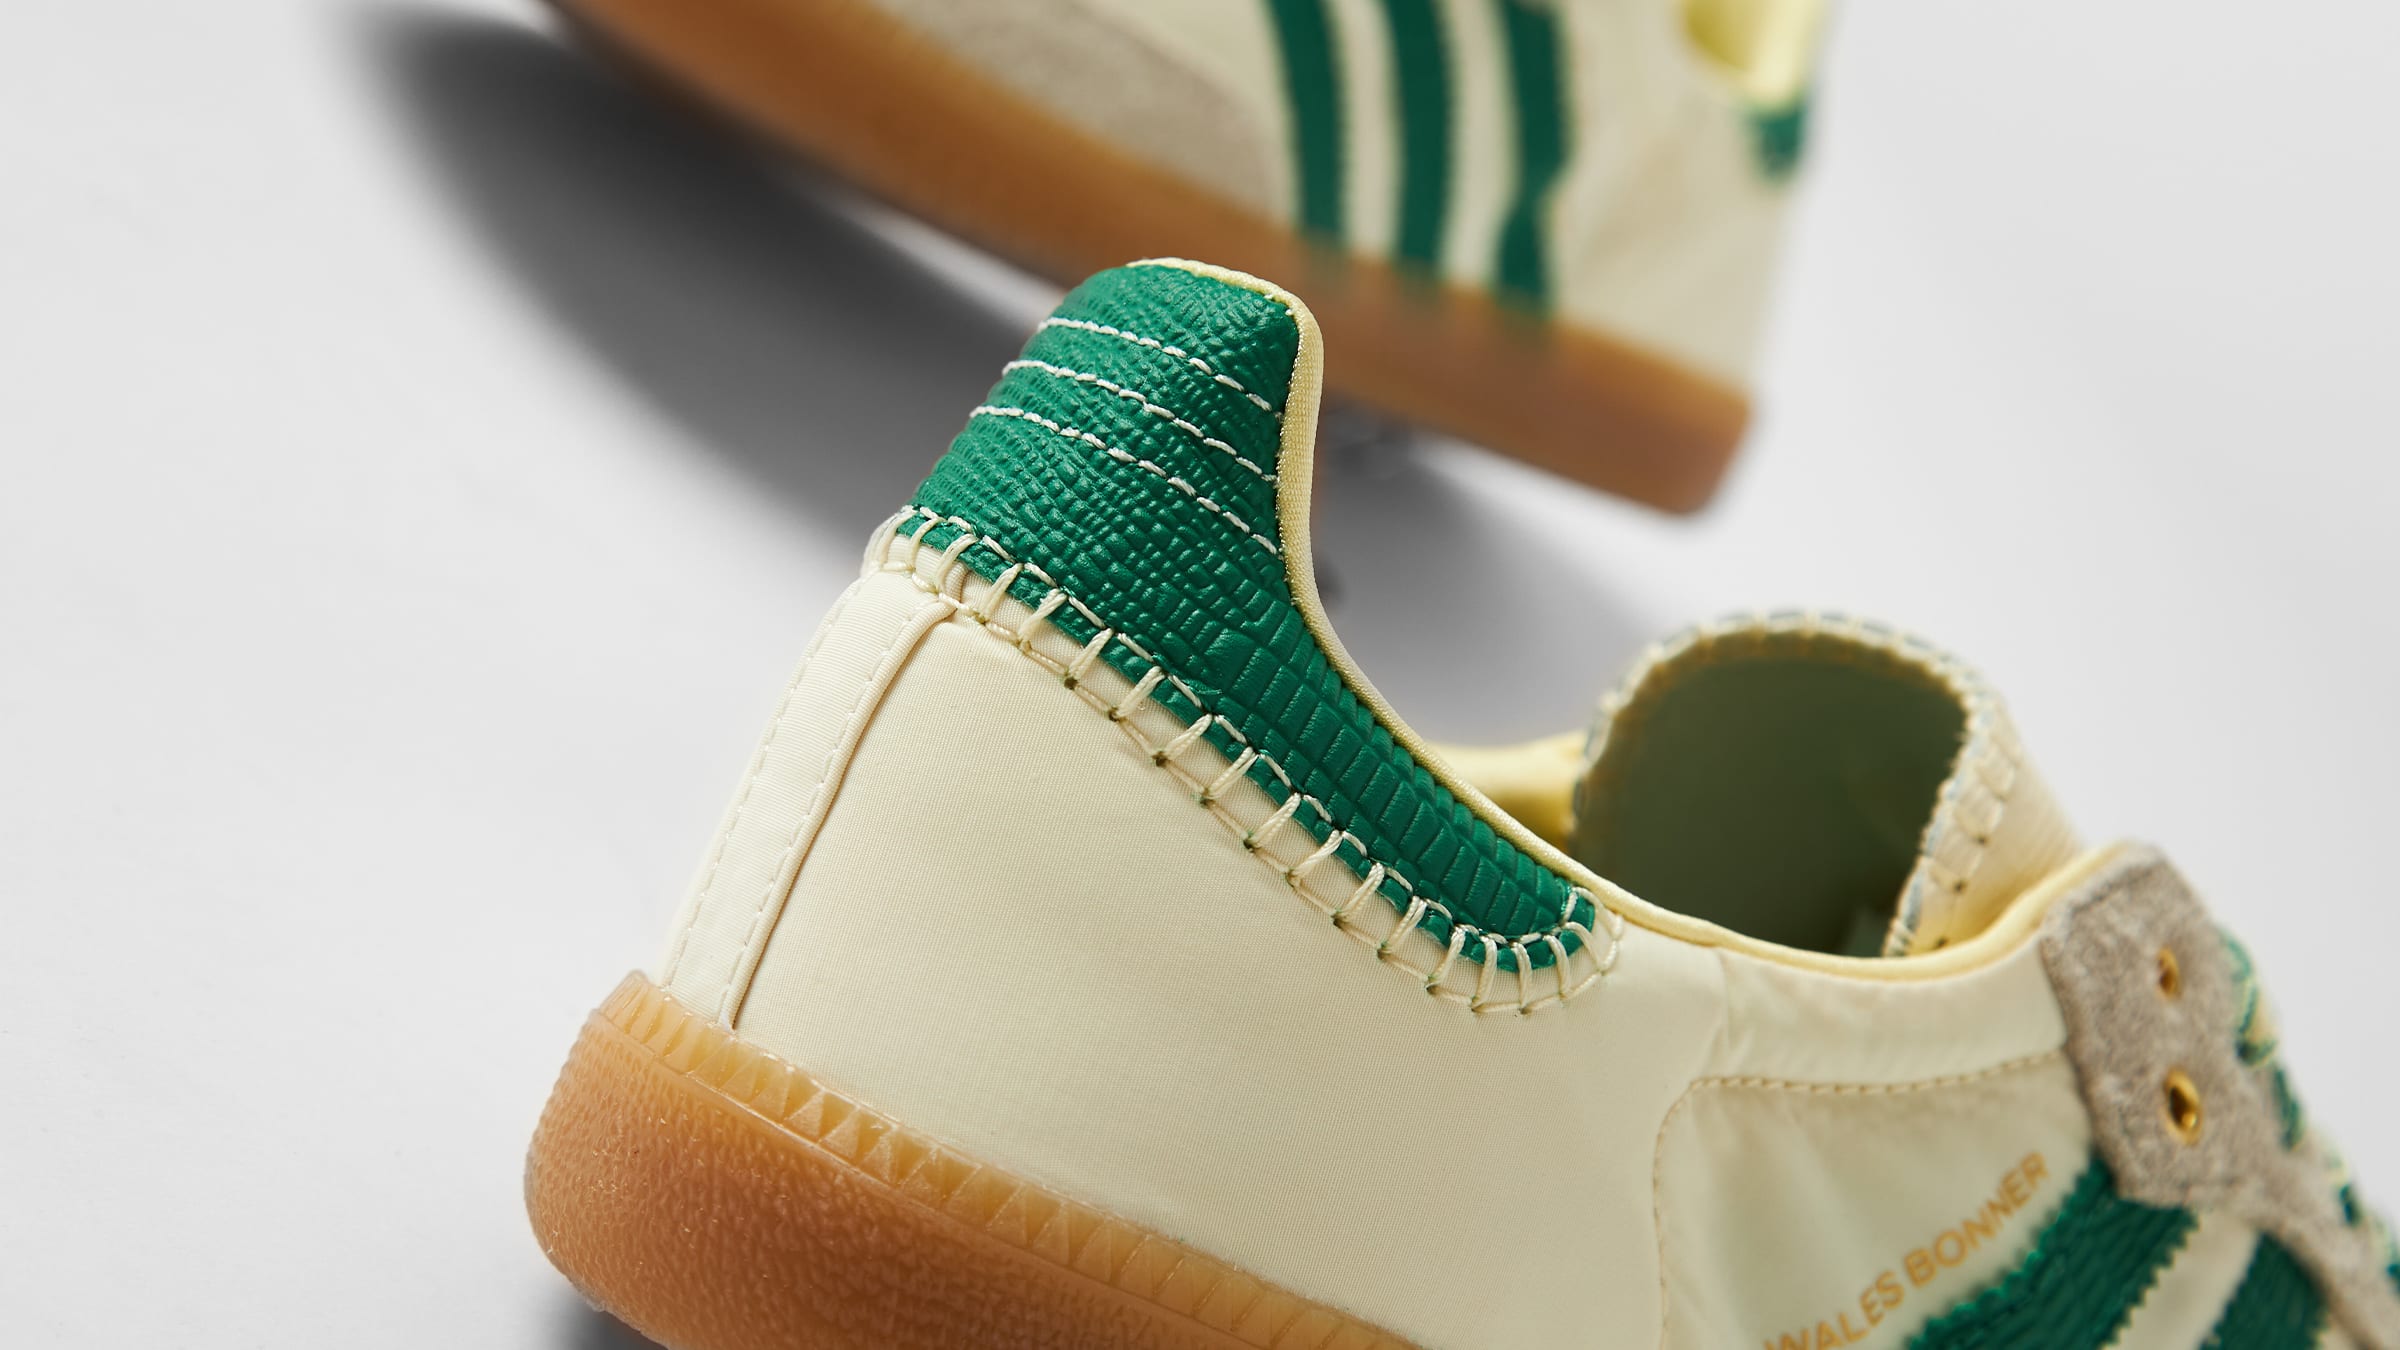 Adidas x Wales Bonner Samba (Cream, Green & Yellow) | END. Launches